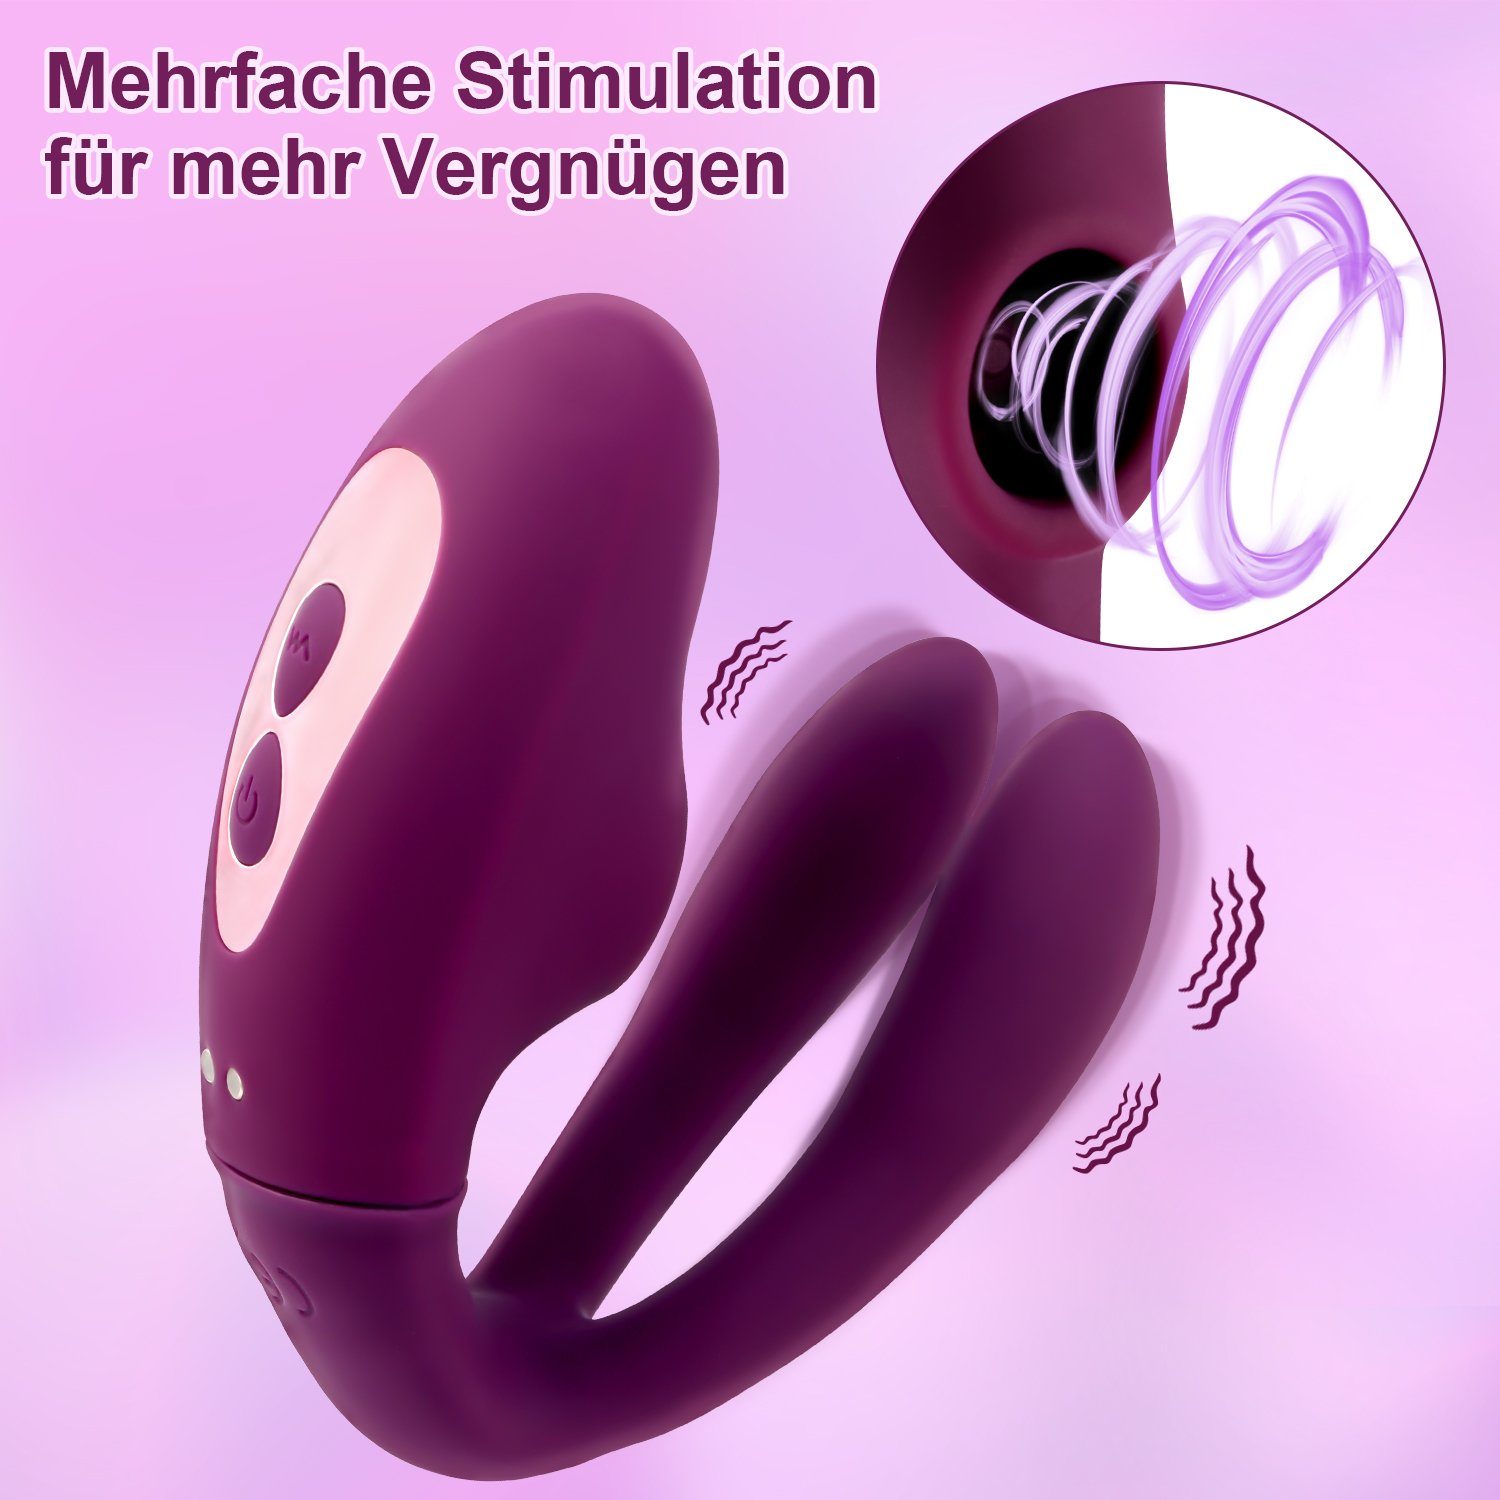 LOVONLIVE Paar-Vibrator Paar-Vibratoren mit Massagestab 1 Dildo 3in Klitoris Erotik Stimulator Vibrator Vibrationsmodi,10 Saugenmodi, mit 10 Fernbedienung, G-Punkt